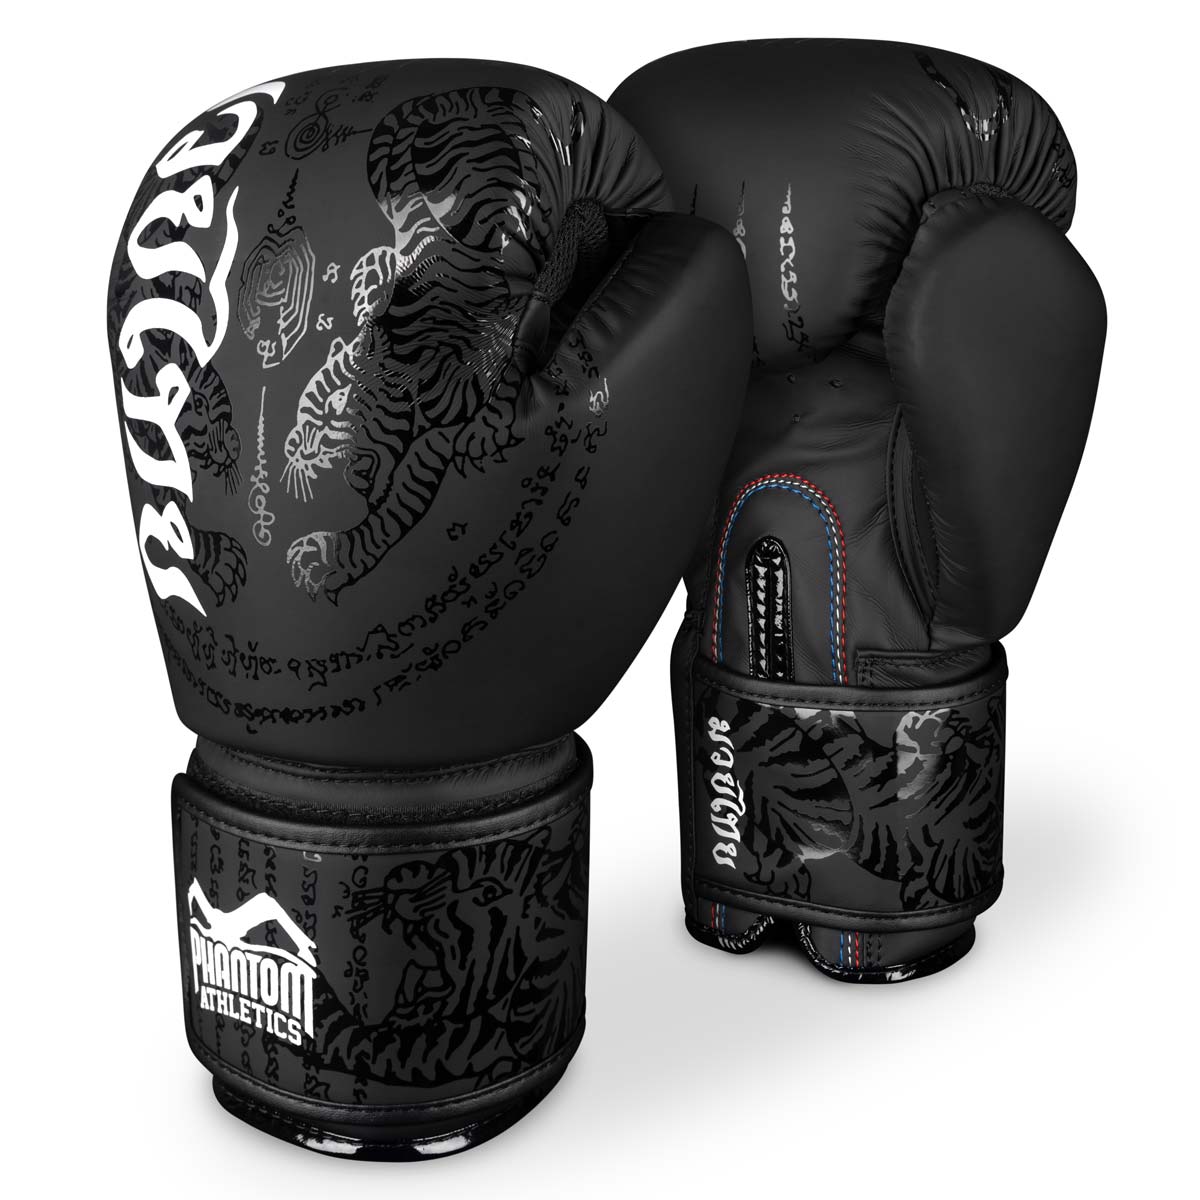 Phantom Muay Thai boxing gloves in a pair